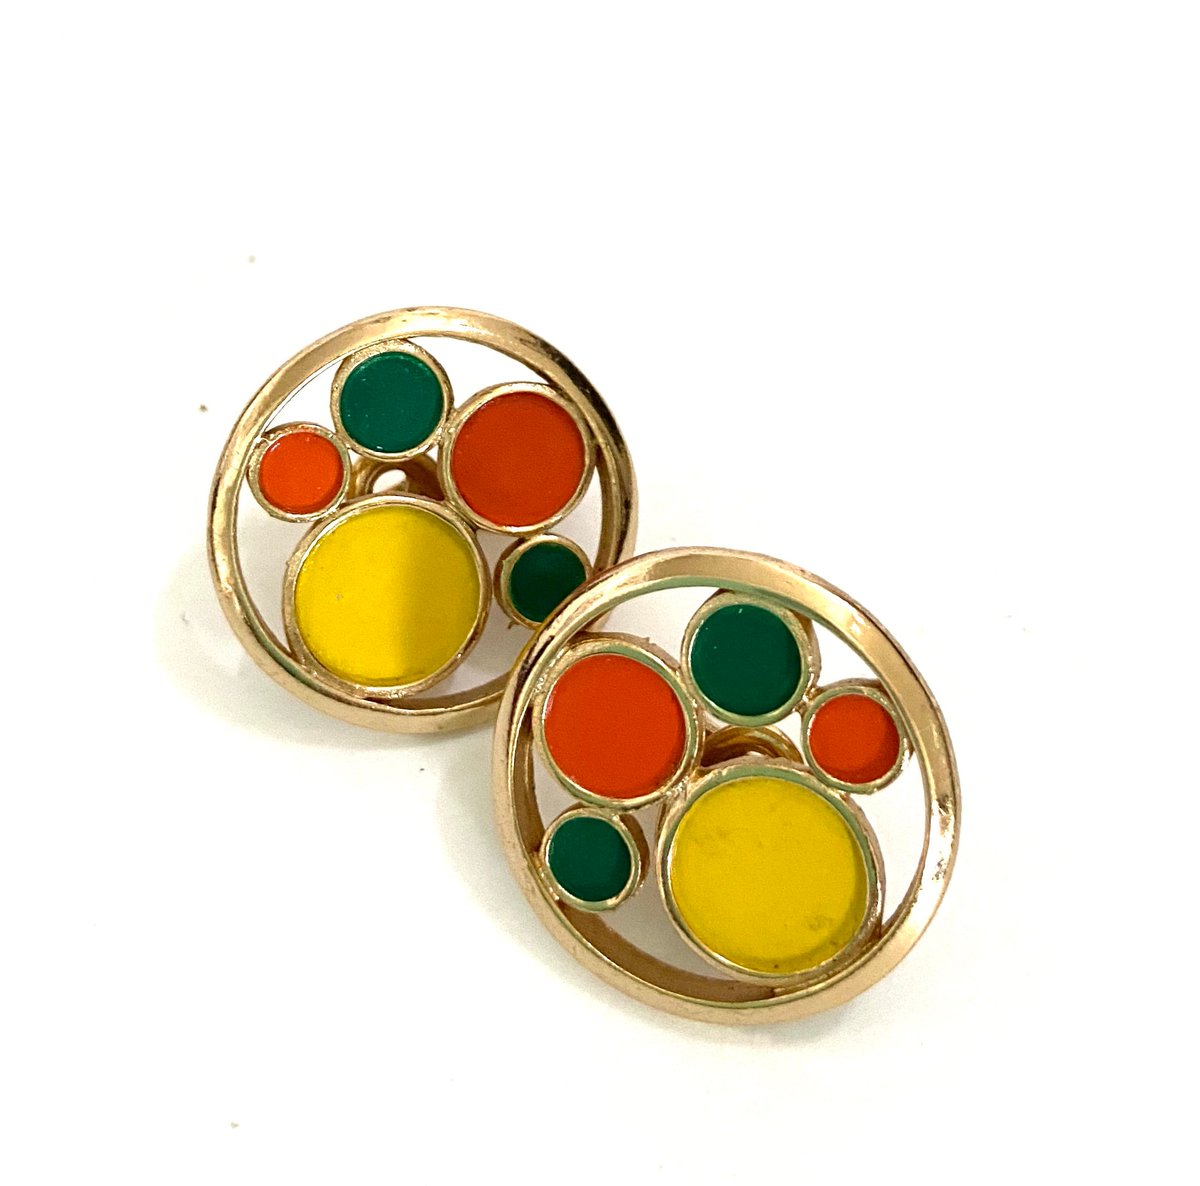 Trifari 'Confetti Colors' Enamel Earrings 1967 Collection Multi-Color Enamel Polka Dots Mod Design Citrus Color Story Gift for Her #VintageEarrings #ClipOnEarrings 
$64.05
➤ etsy.com/listing/845597…